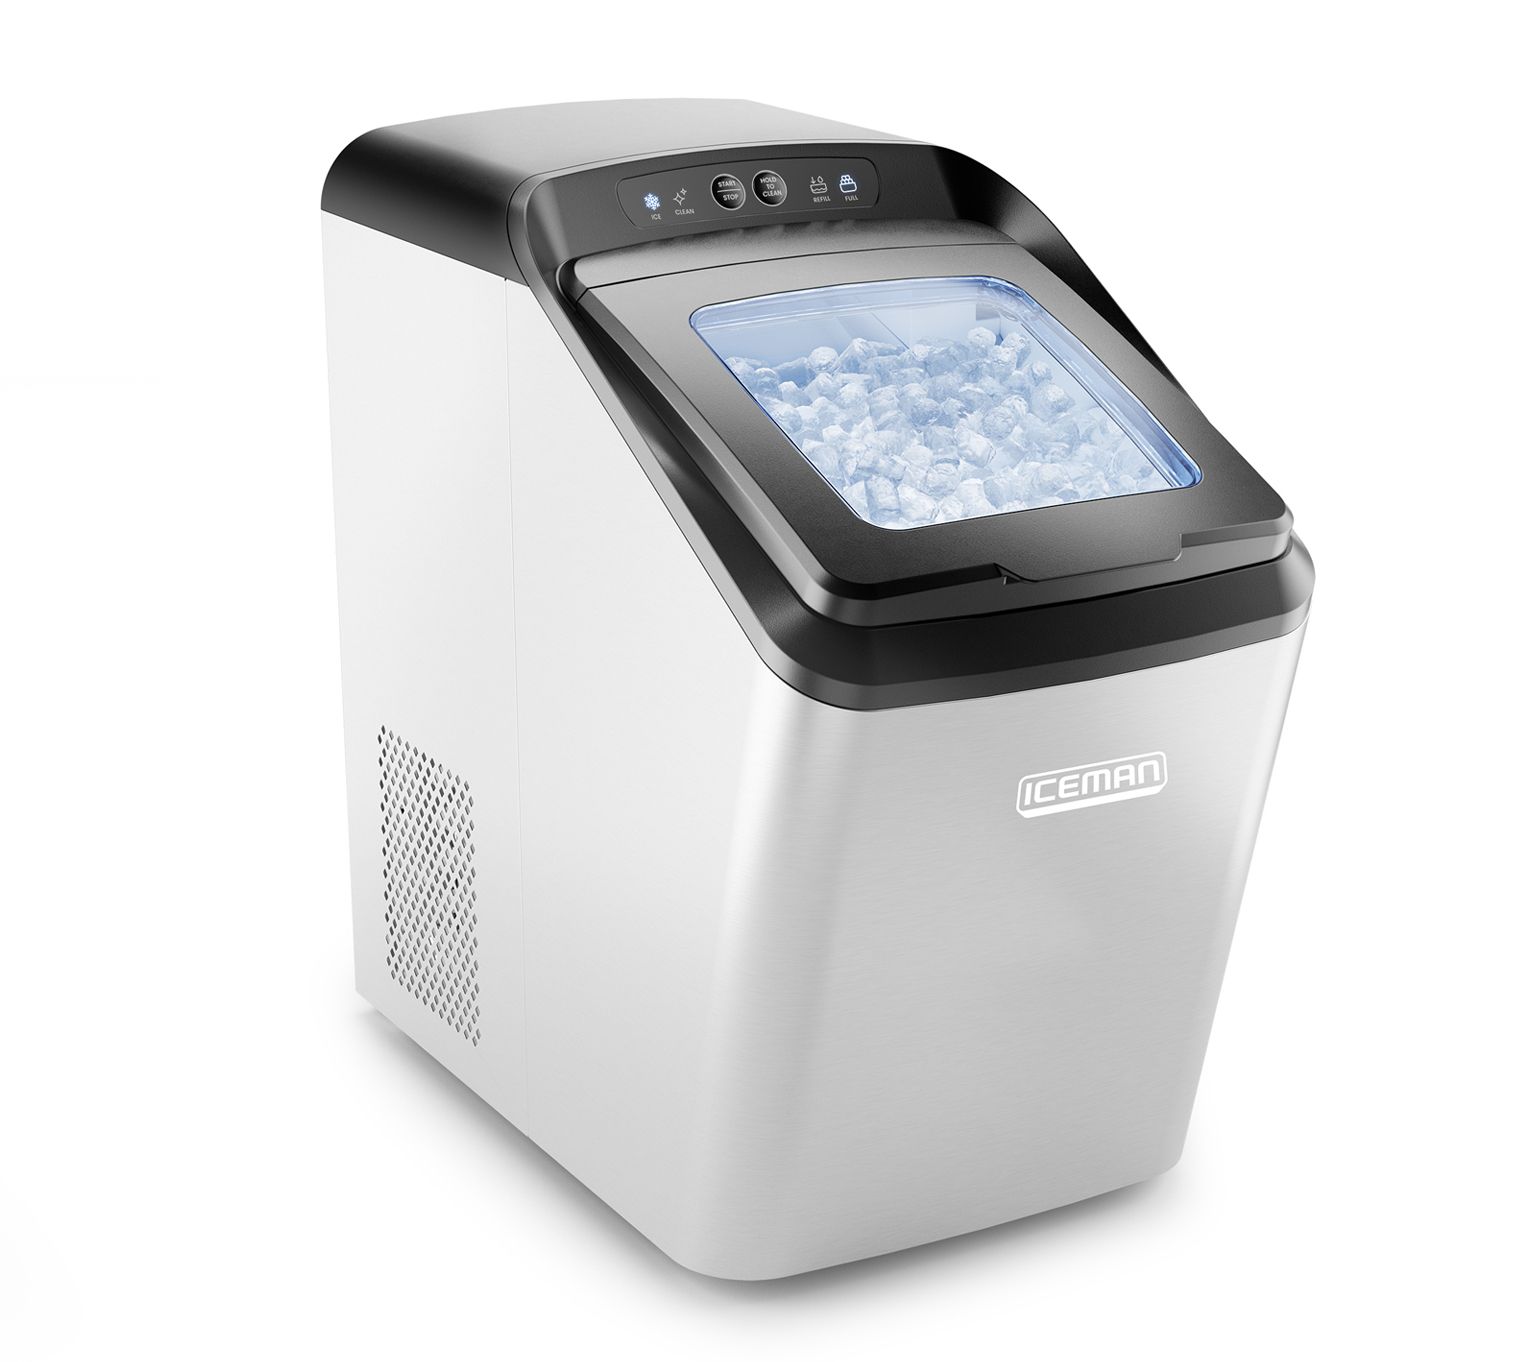 Avanti Digital Nugget Ice Maker with Dispenser on QVC 